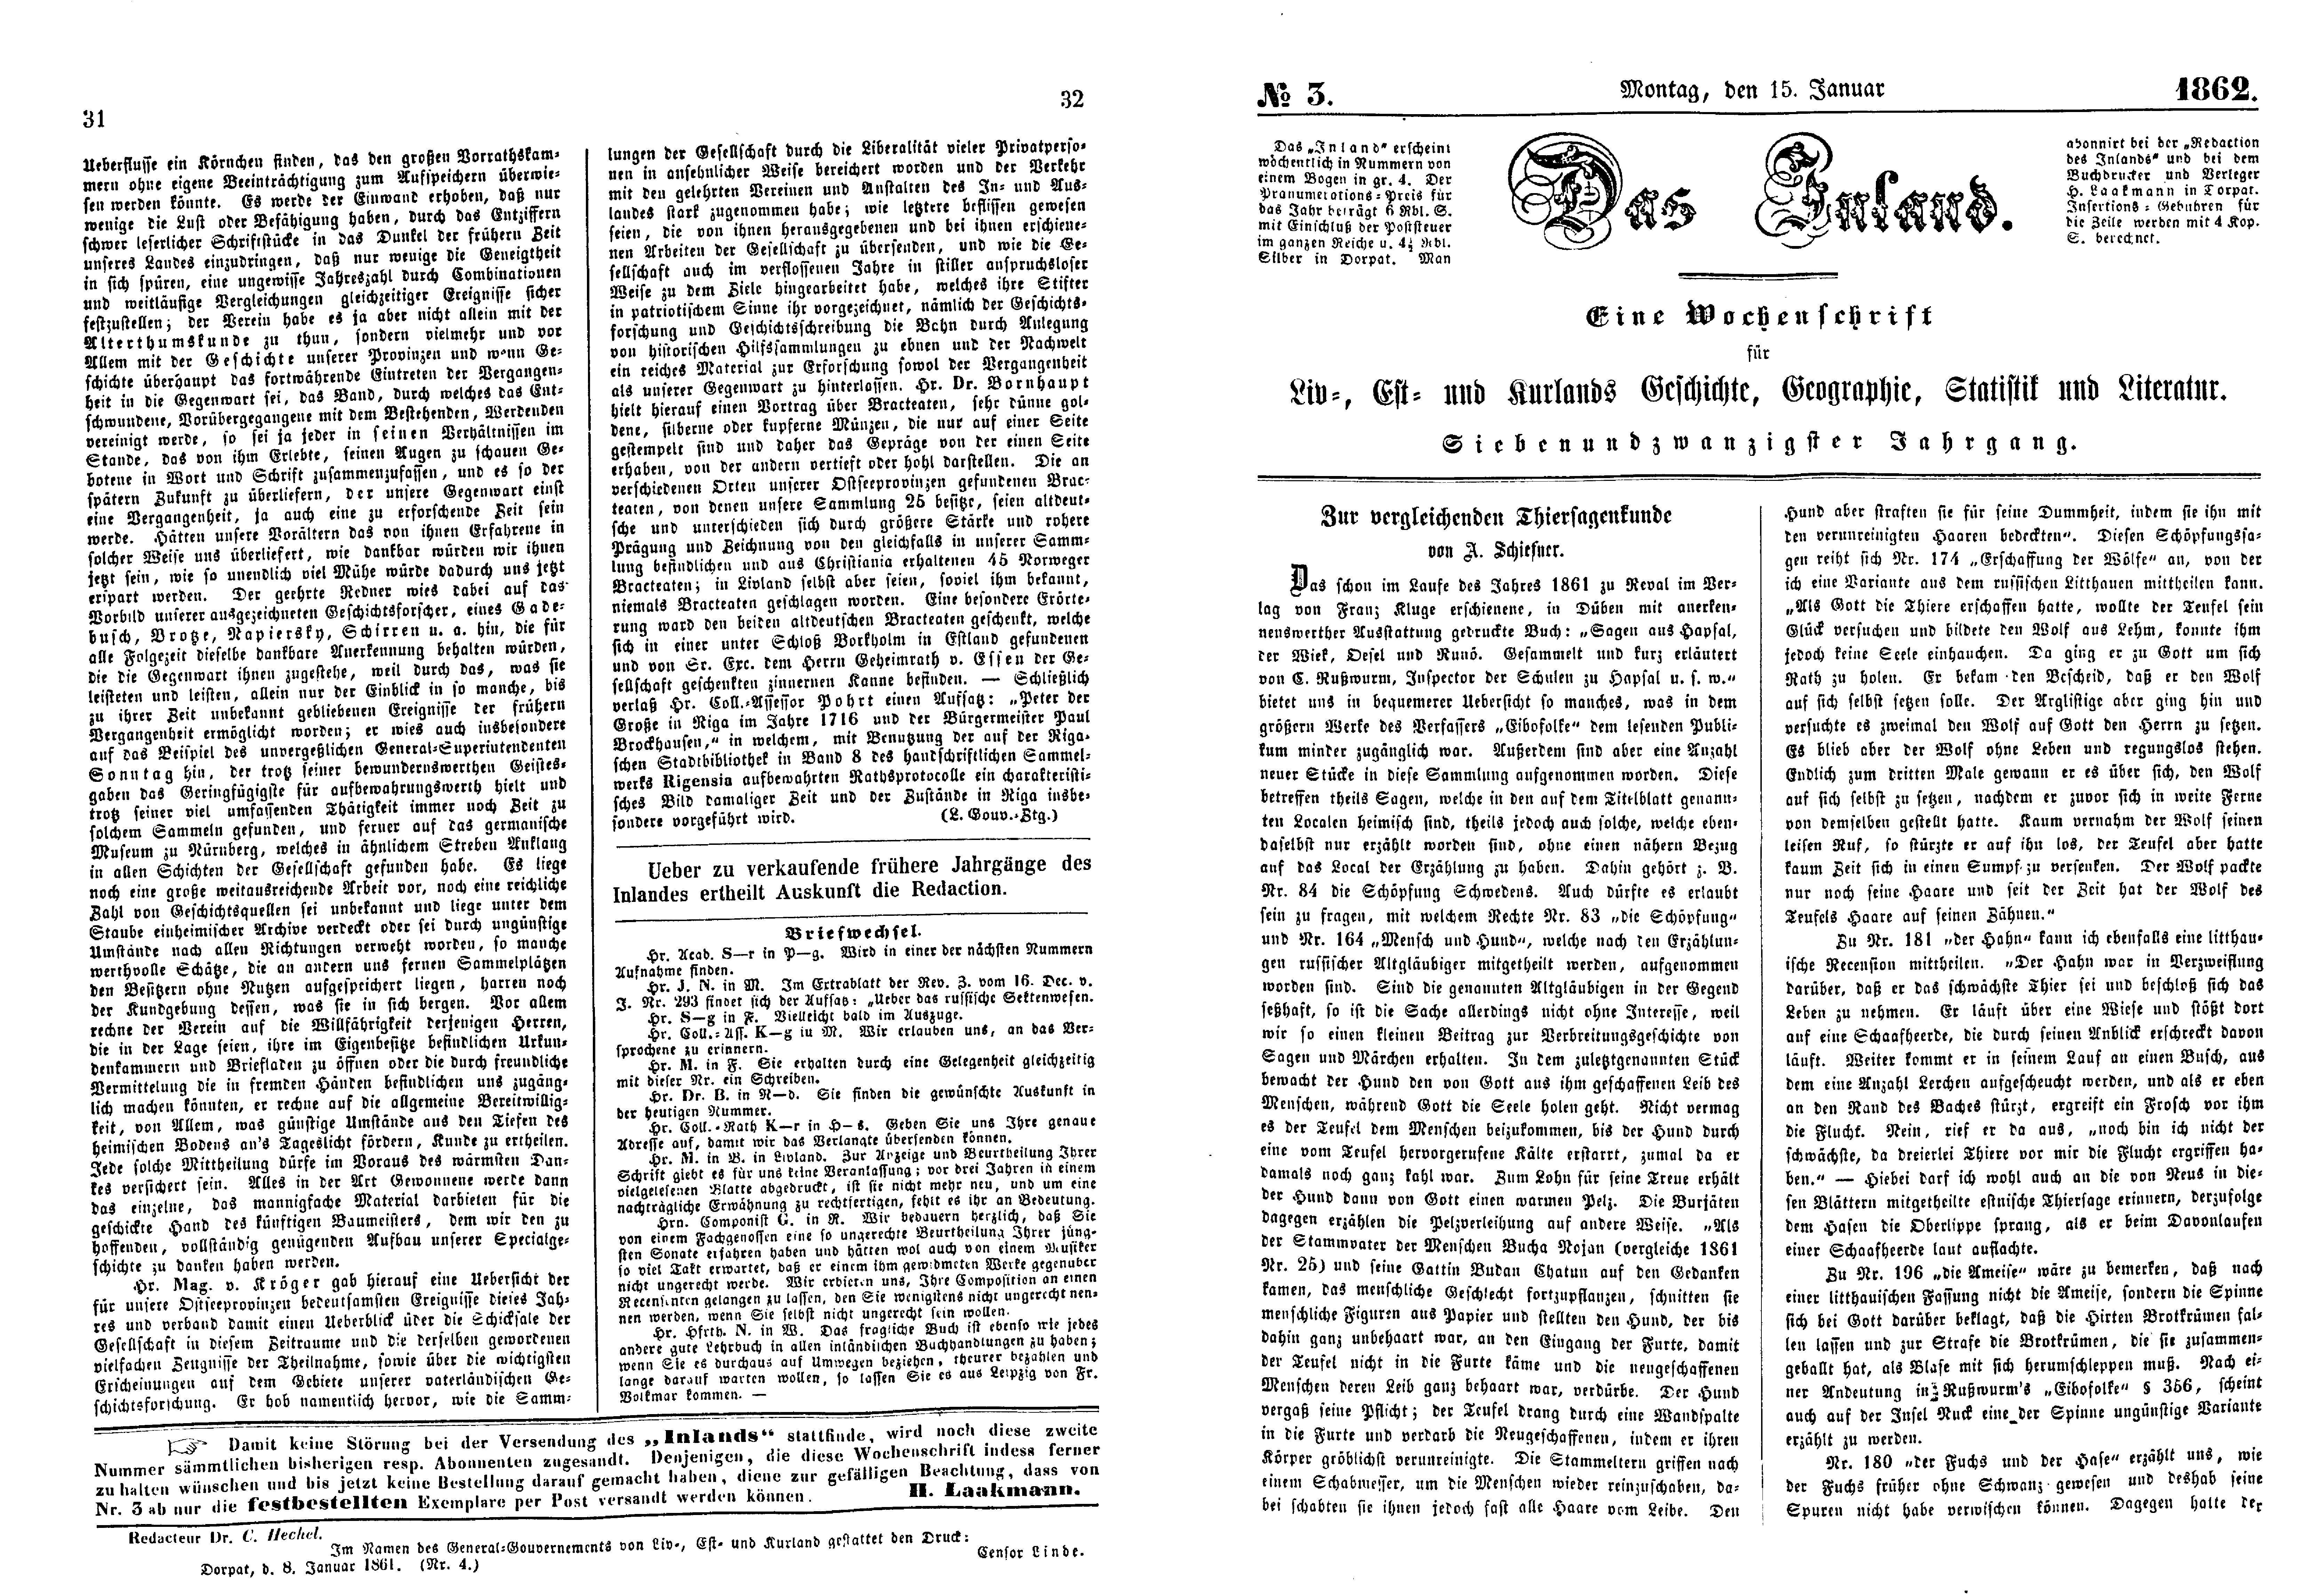 Das Inland [27] (1862) | 12. (31-34) Main body of text